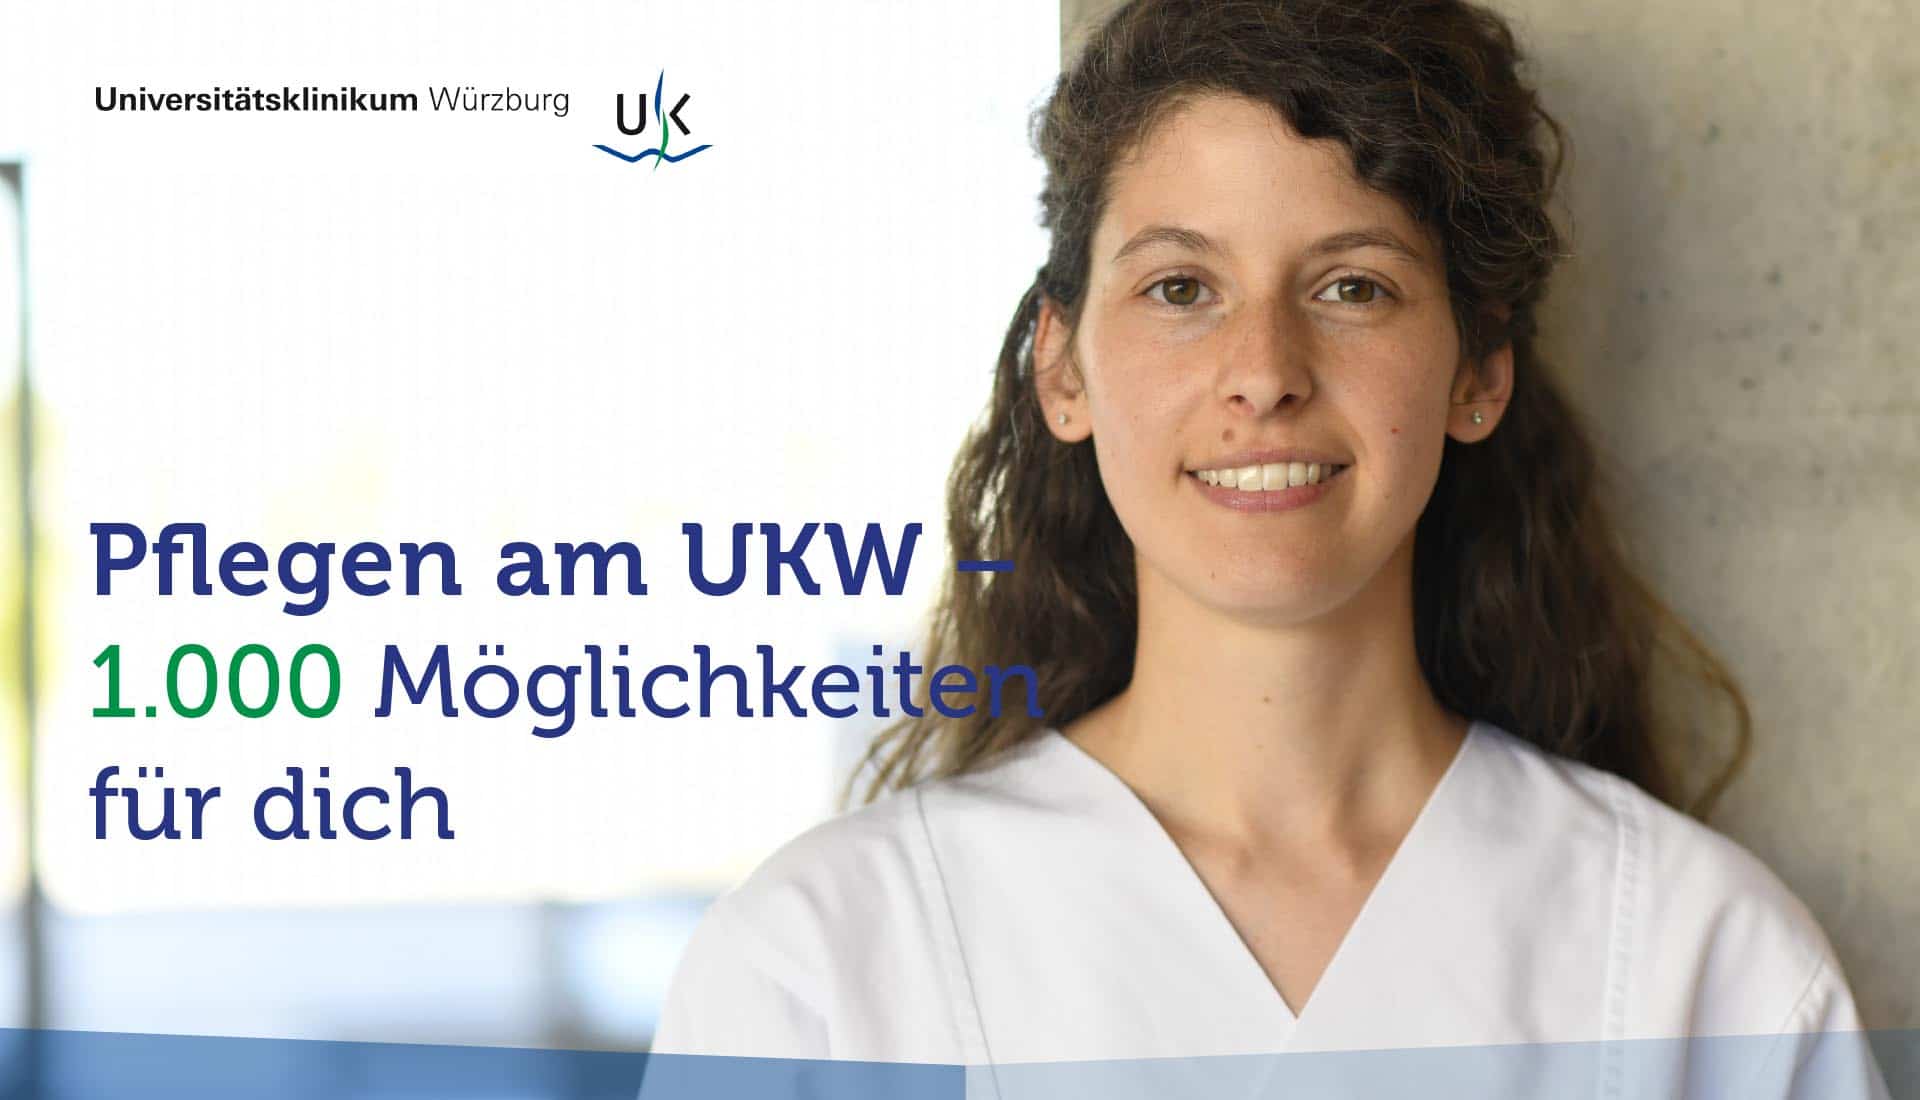 Uniklinik Würzburg Karriereseite Titel mit Claim